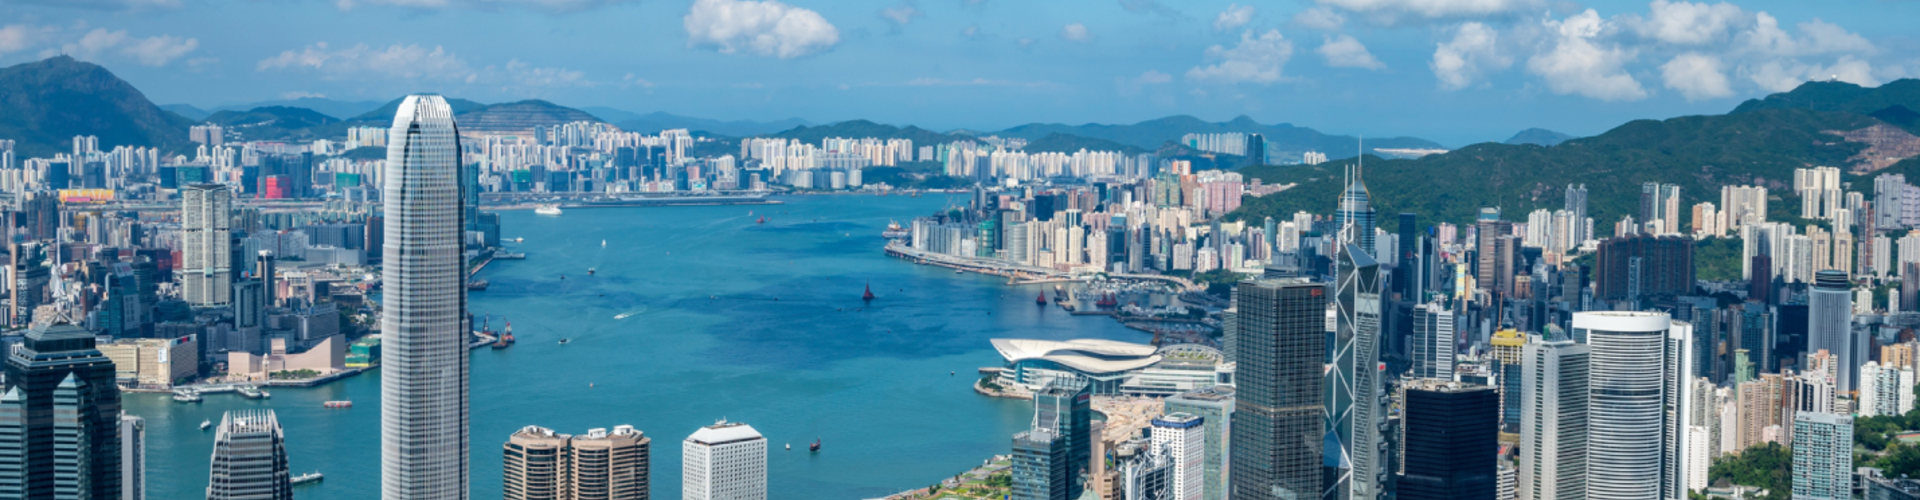 hong kong tourism board krds